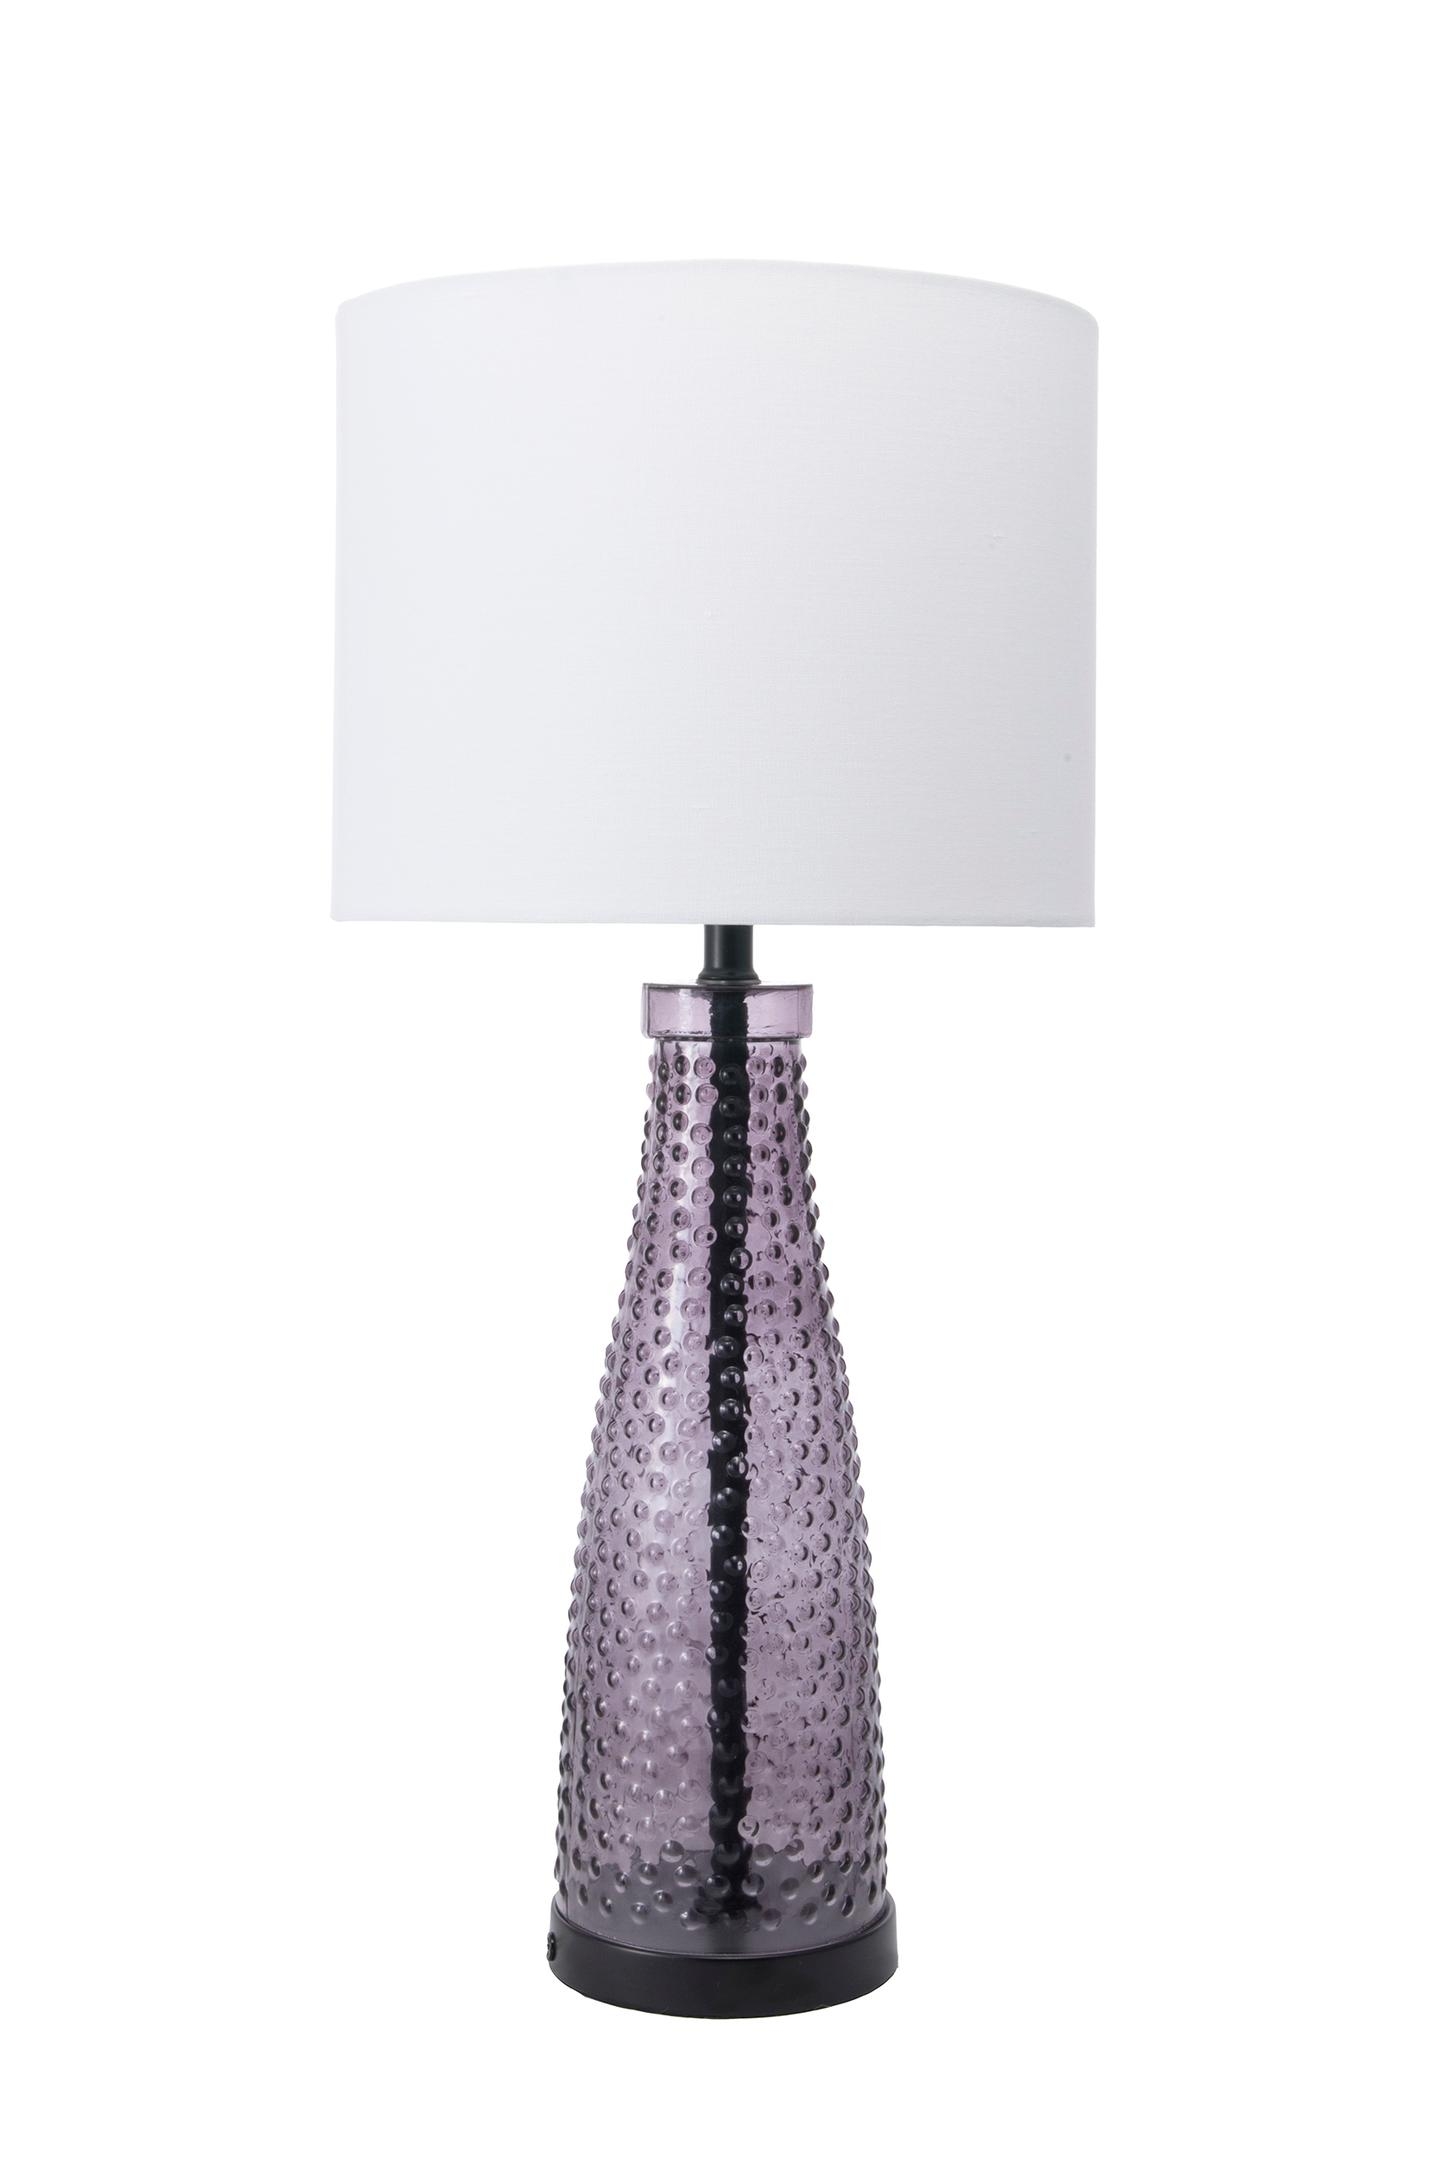  Warren 29" Glass Table Lamp - Image 1